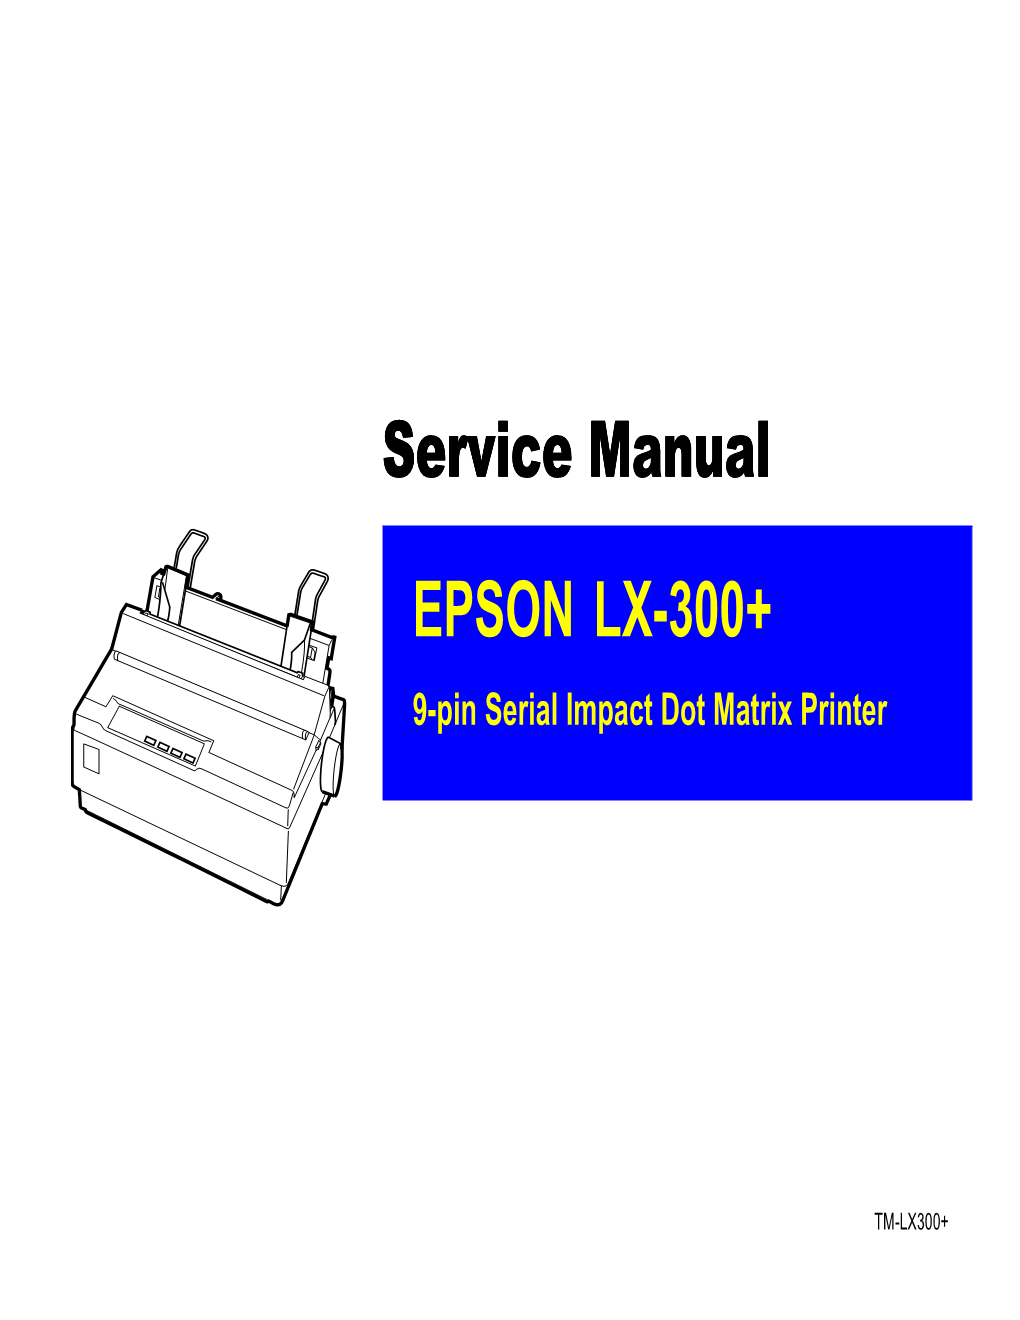 EPSON LX-300+ Service Manual